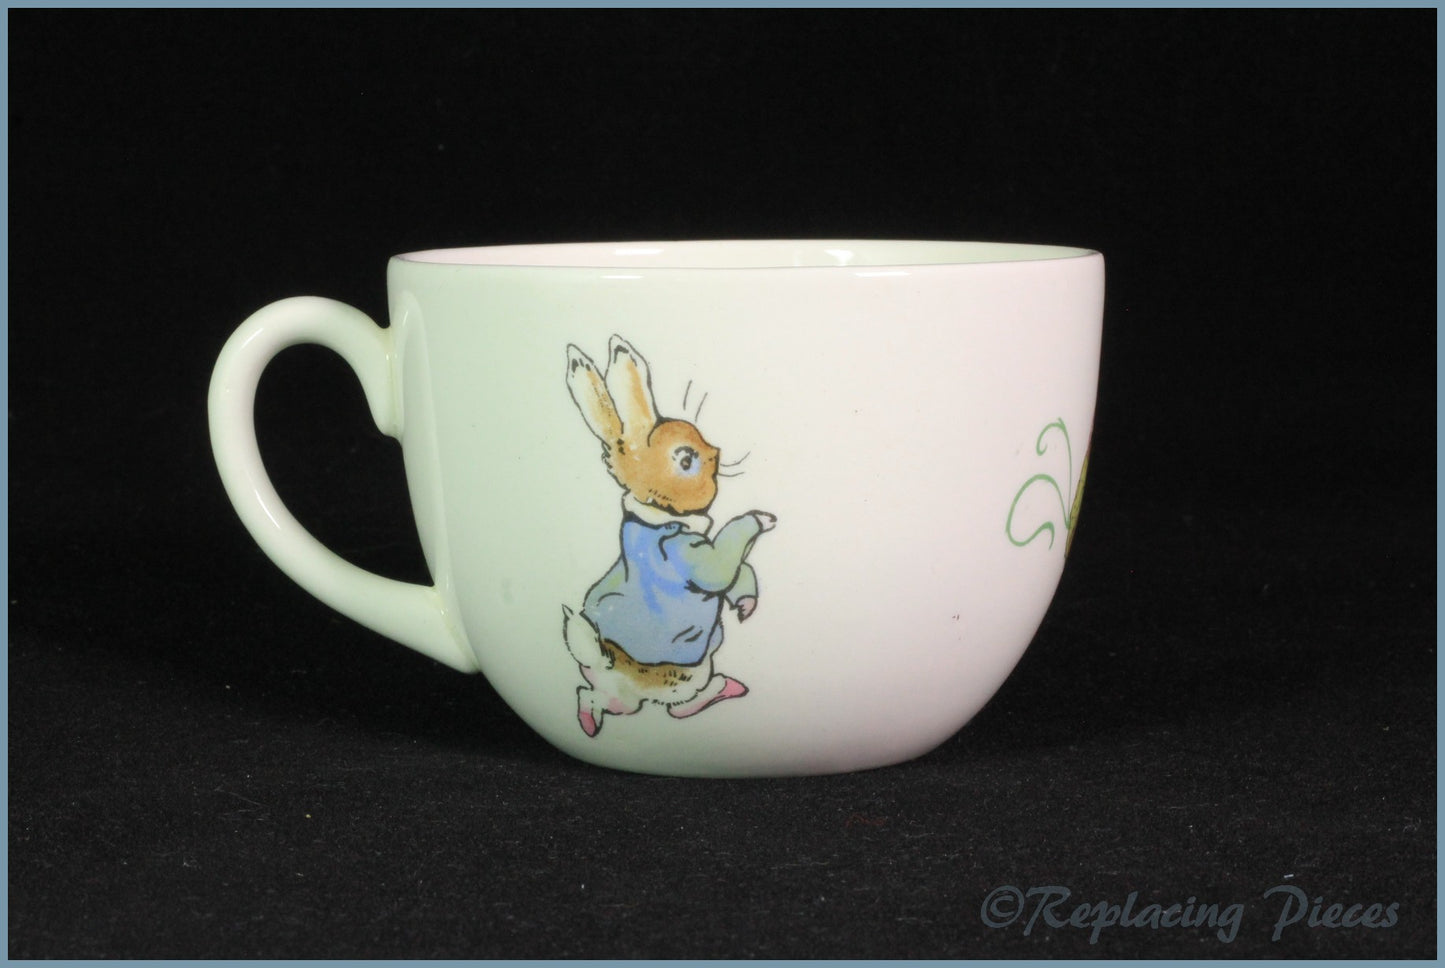 Wedgwood - Peter Rabbit - Teacup